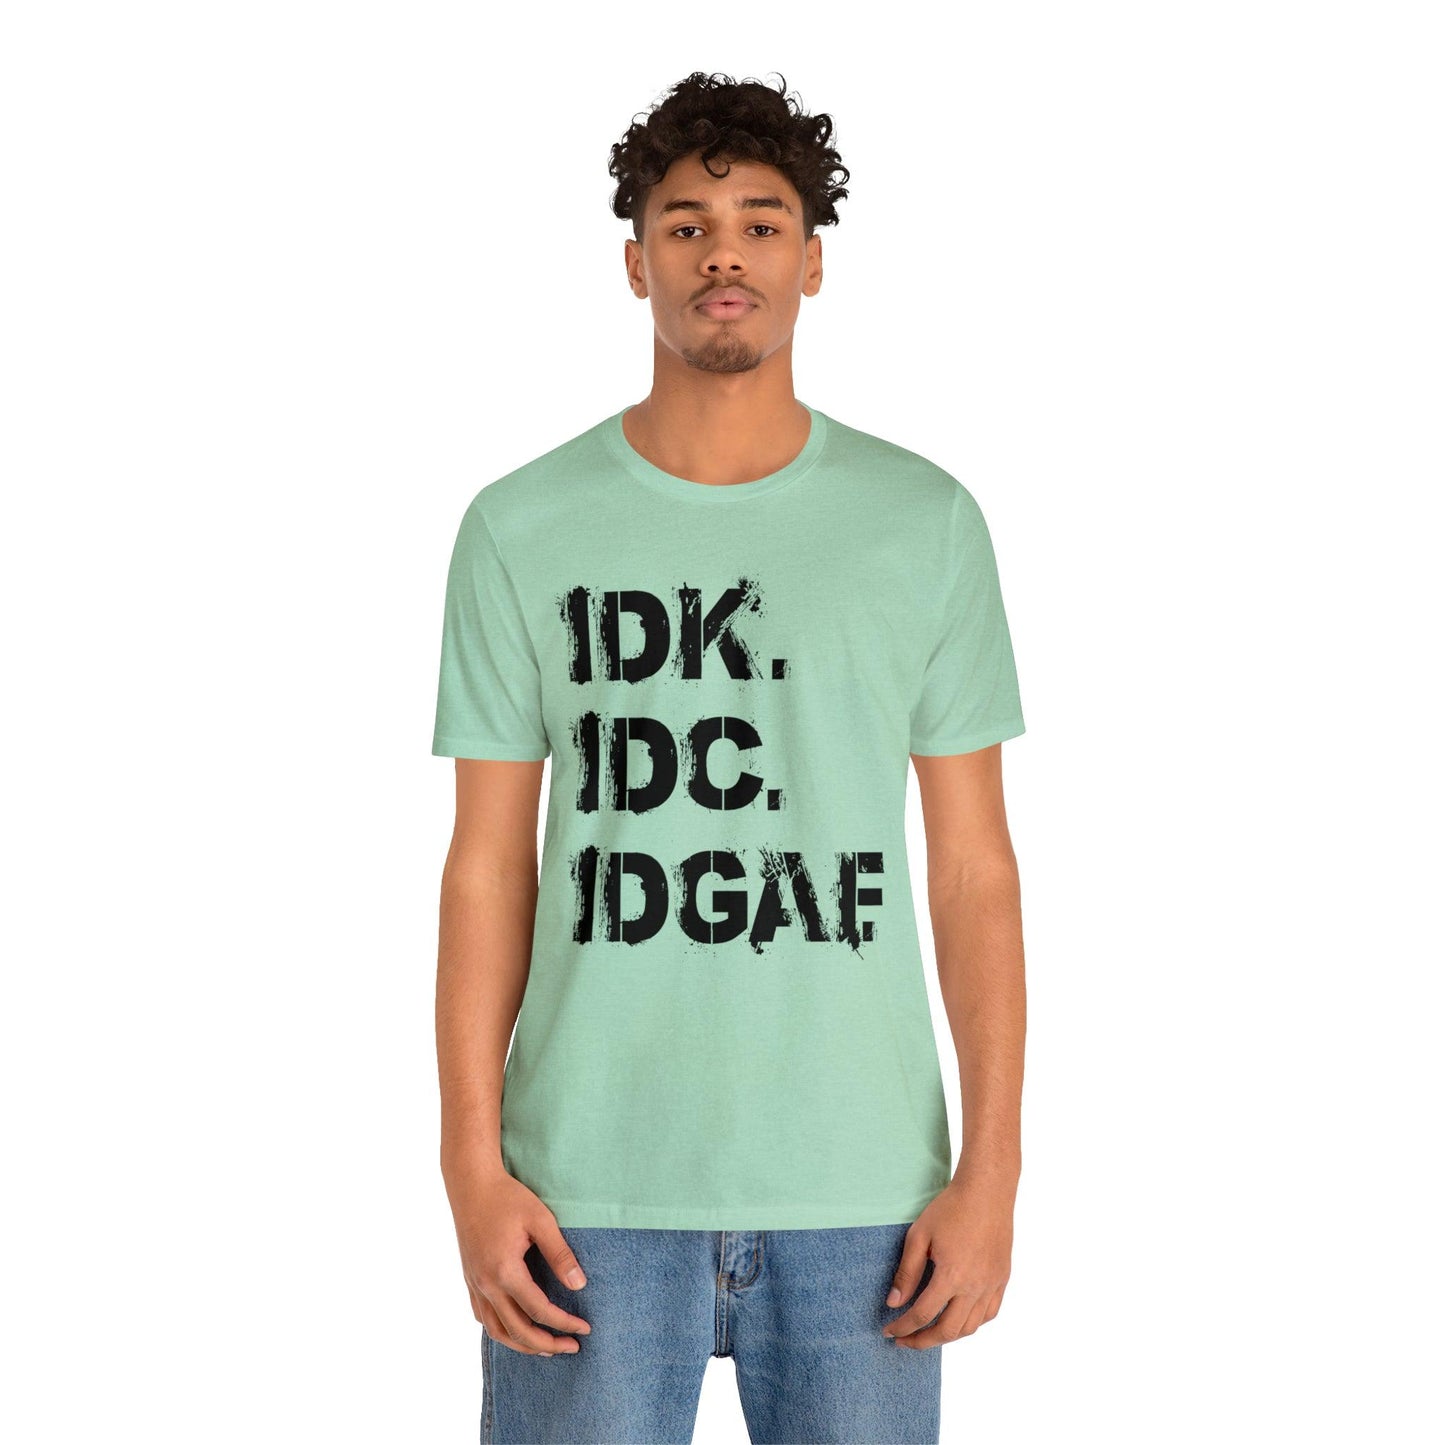 IDK IDC IDGAF - Wicked Naughty Apparel